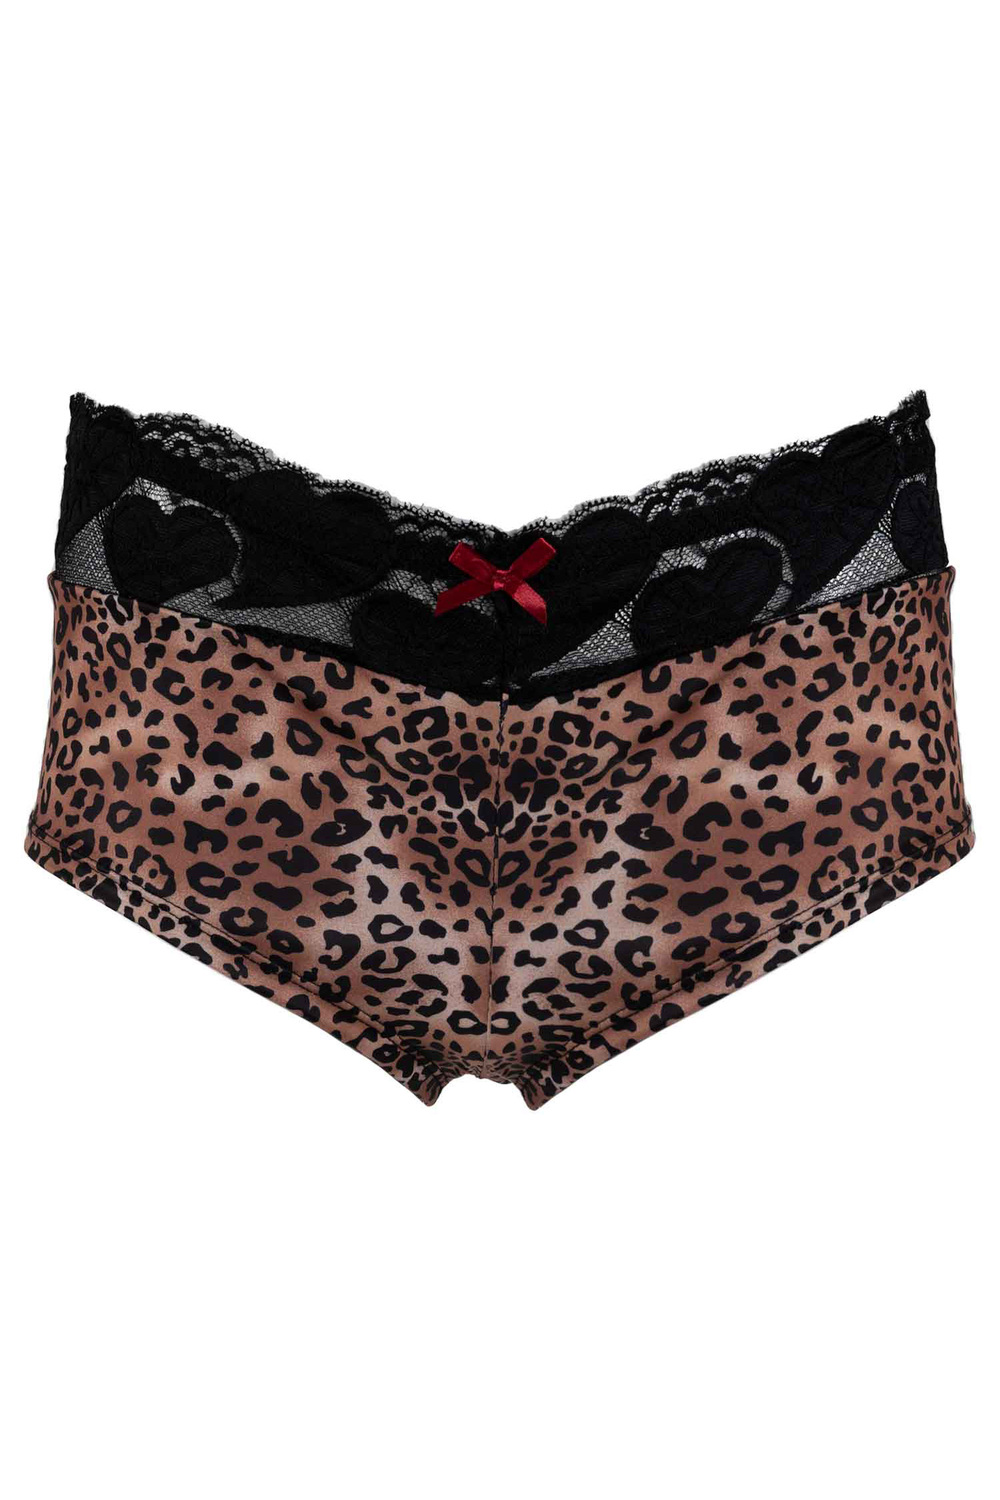 NWT Ambrielle HIGH WAIST LEOPARD/BLACK SHEER Women's Underwear PANTIE Size  XS 